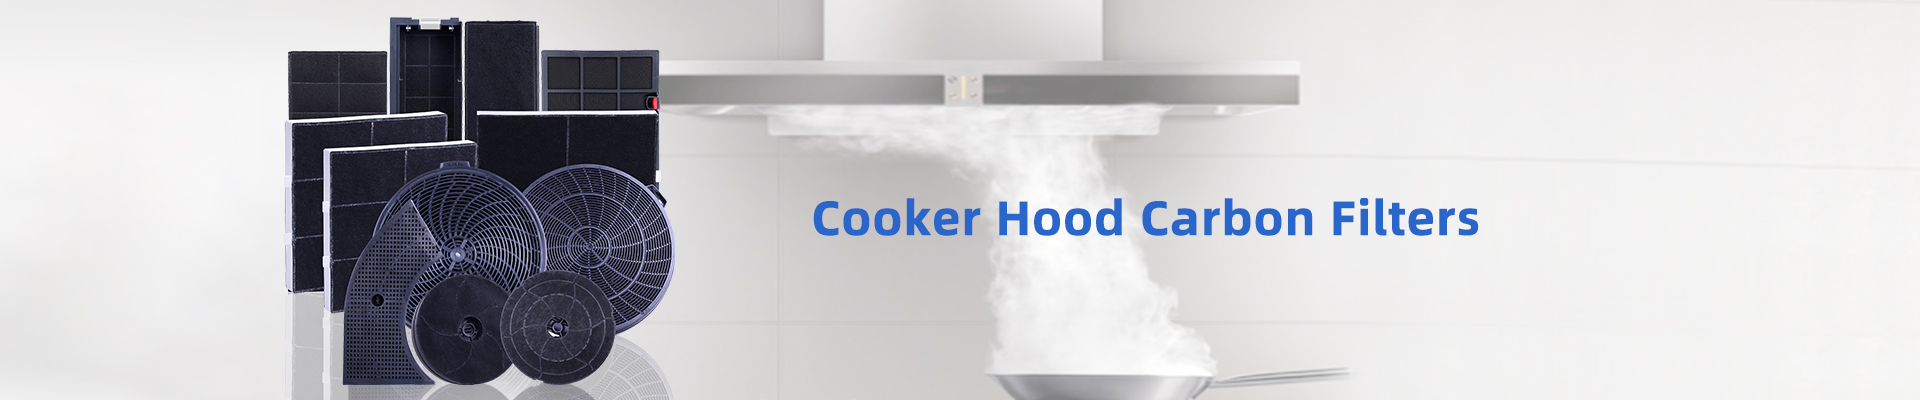 Cooker Hood Carbon Filter